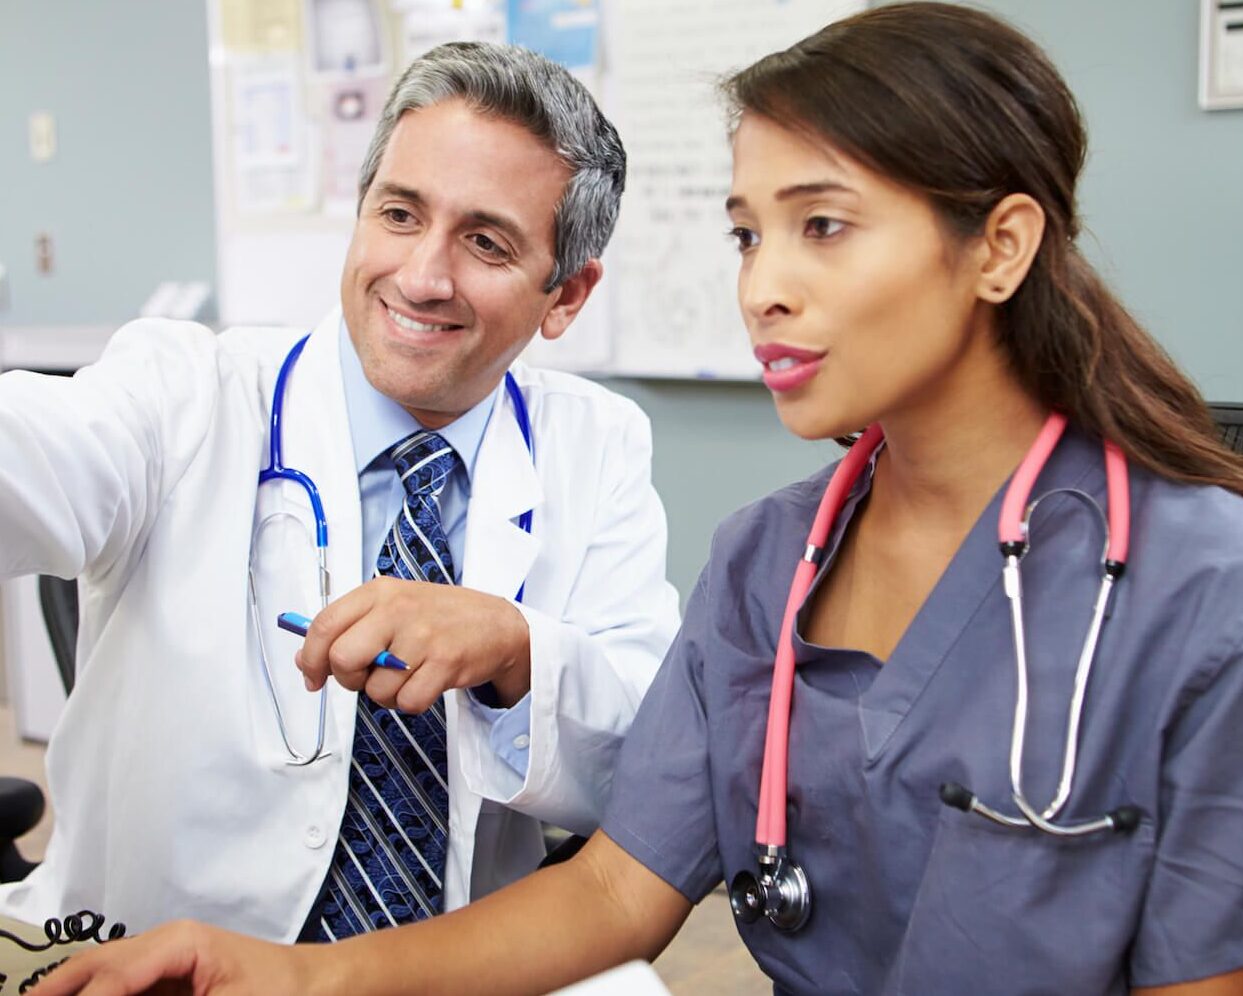 Medical Billing Services in Florida - MedICD